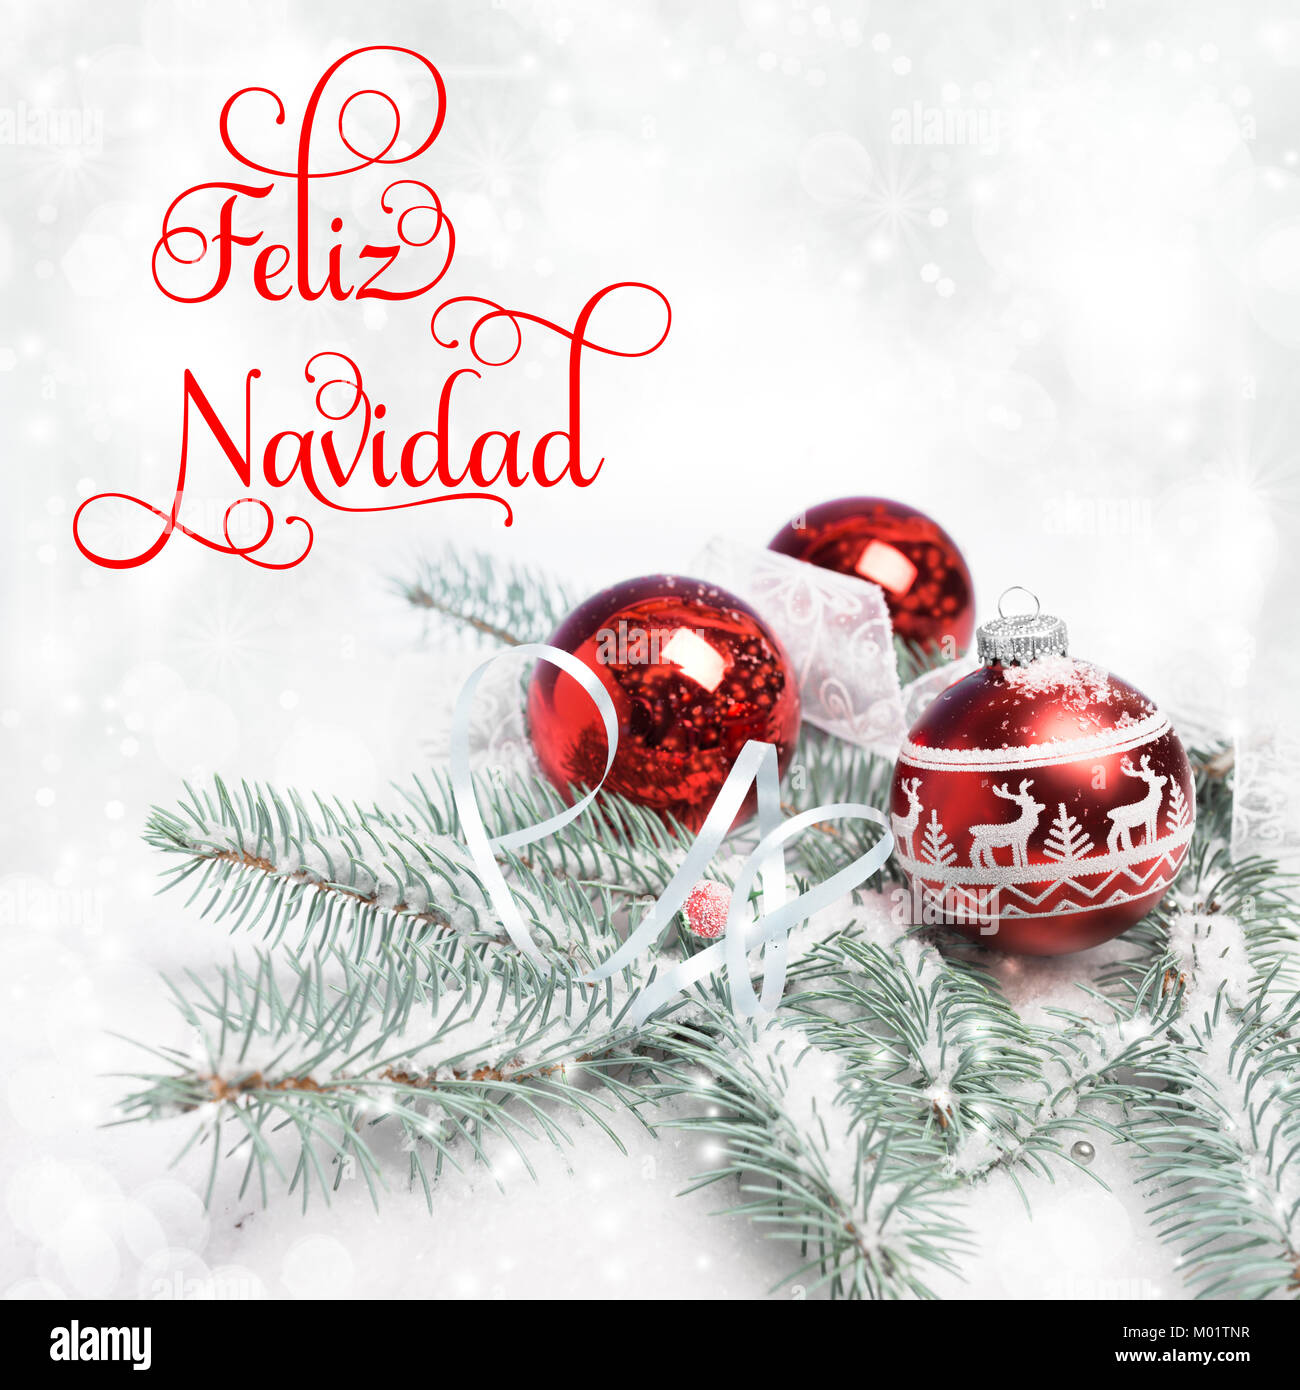 Frasi Di Buon Natale In Spagnolo.Feliz Navidad Is Spanish For Merry Christmas Immagini E Fotos Stock Alamy